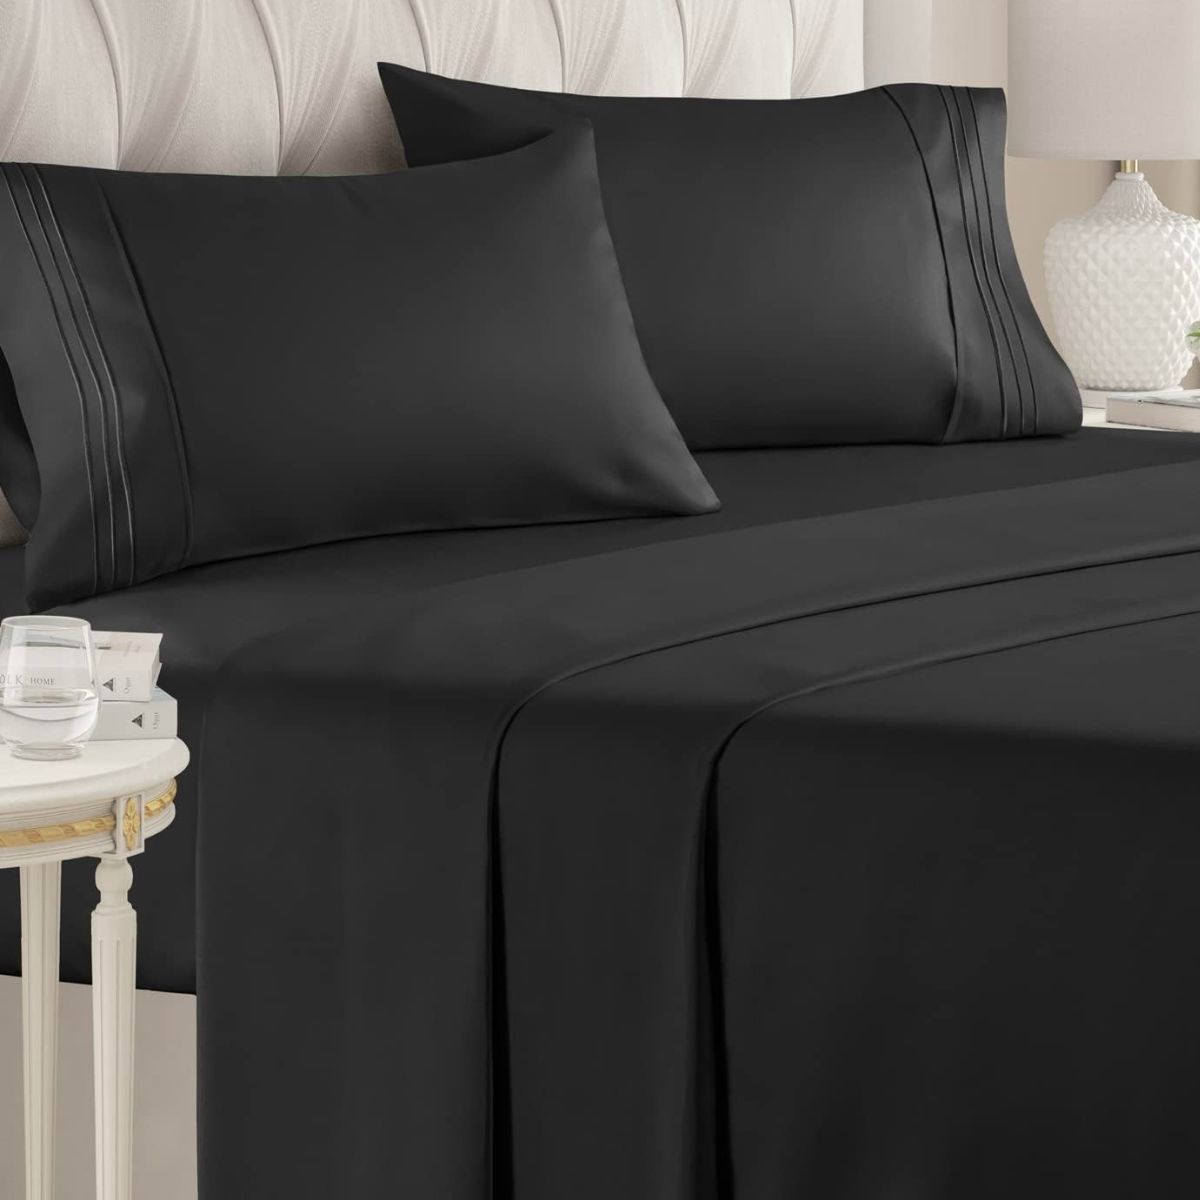 CGK full sheet set on a bed in black microfiber